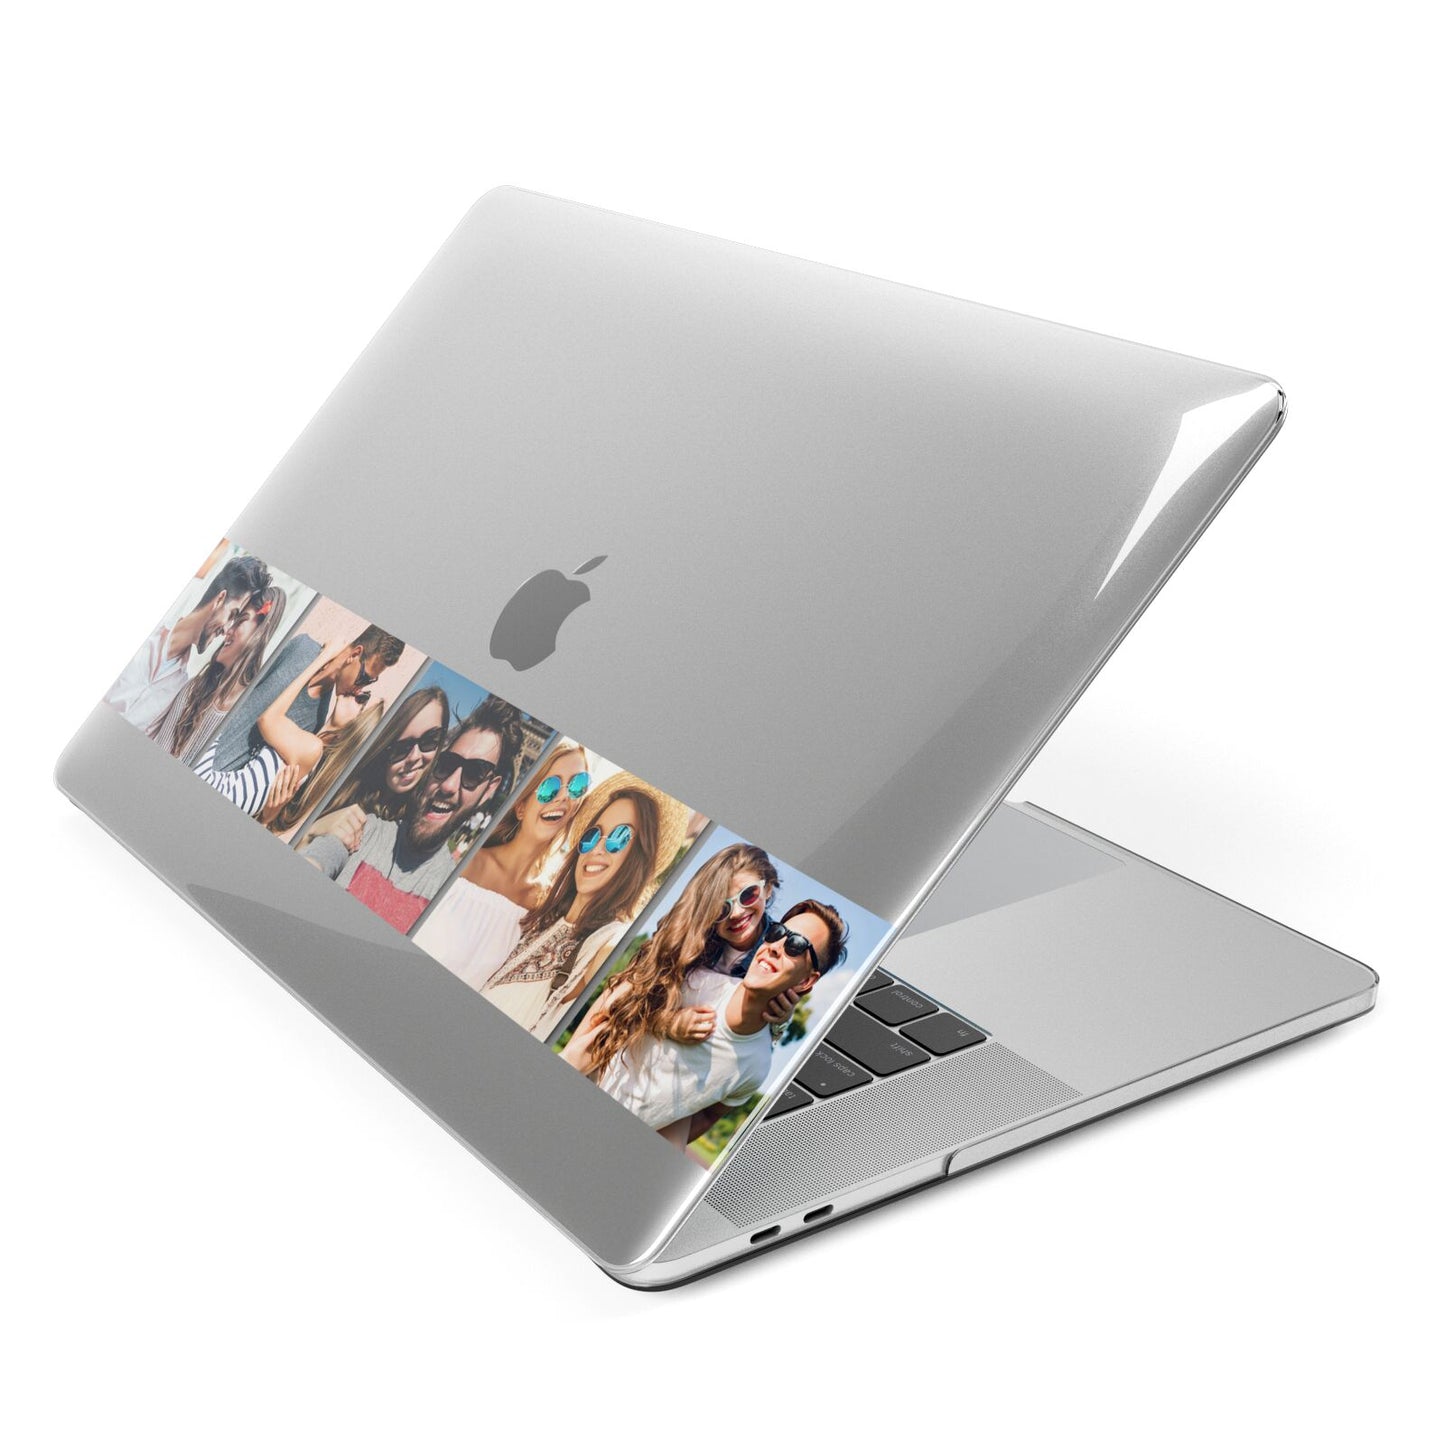 Photo Strip Montage Upload Apple MacBook Case Side View